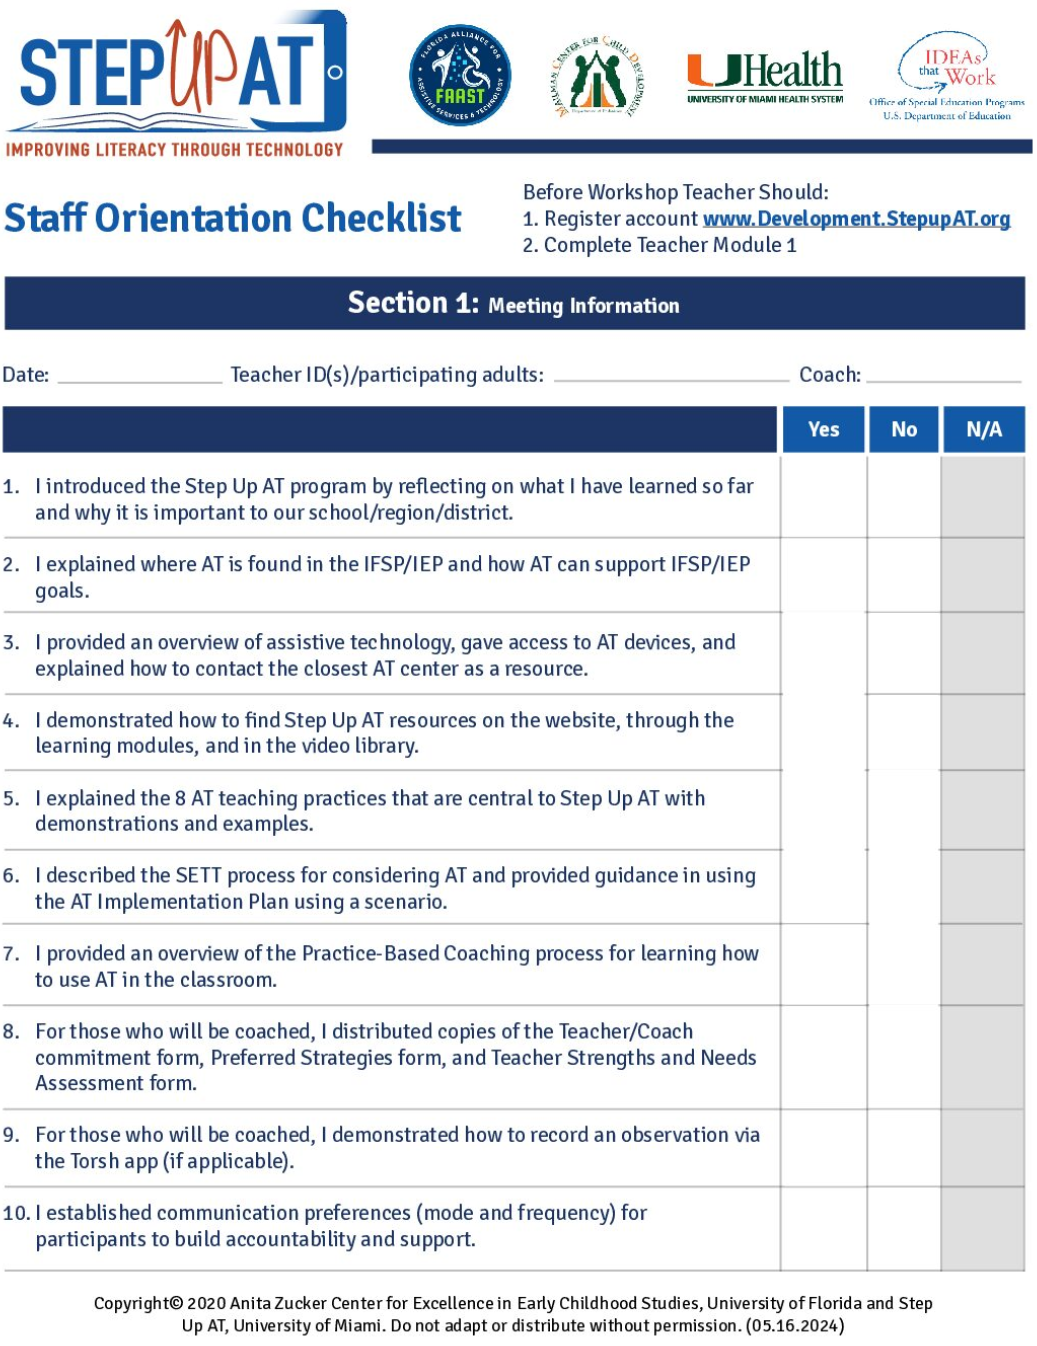 Screenshot of the Staffing Orientation Checklist Rev 07 24